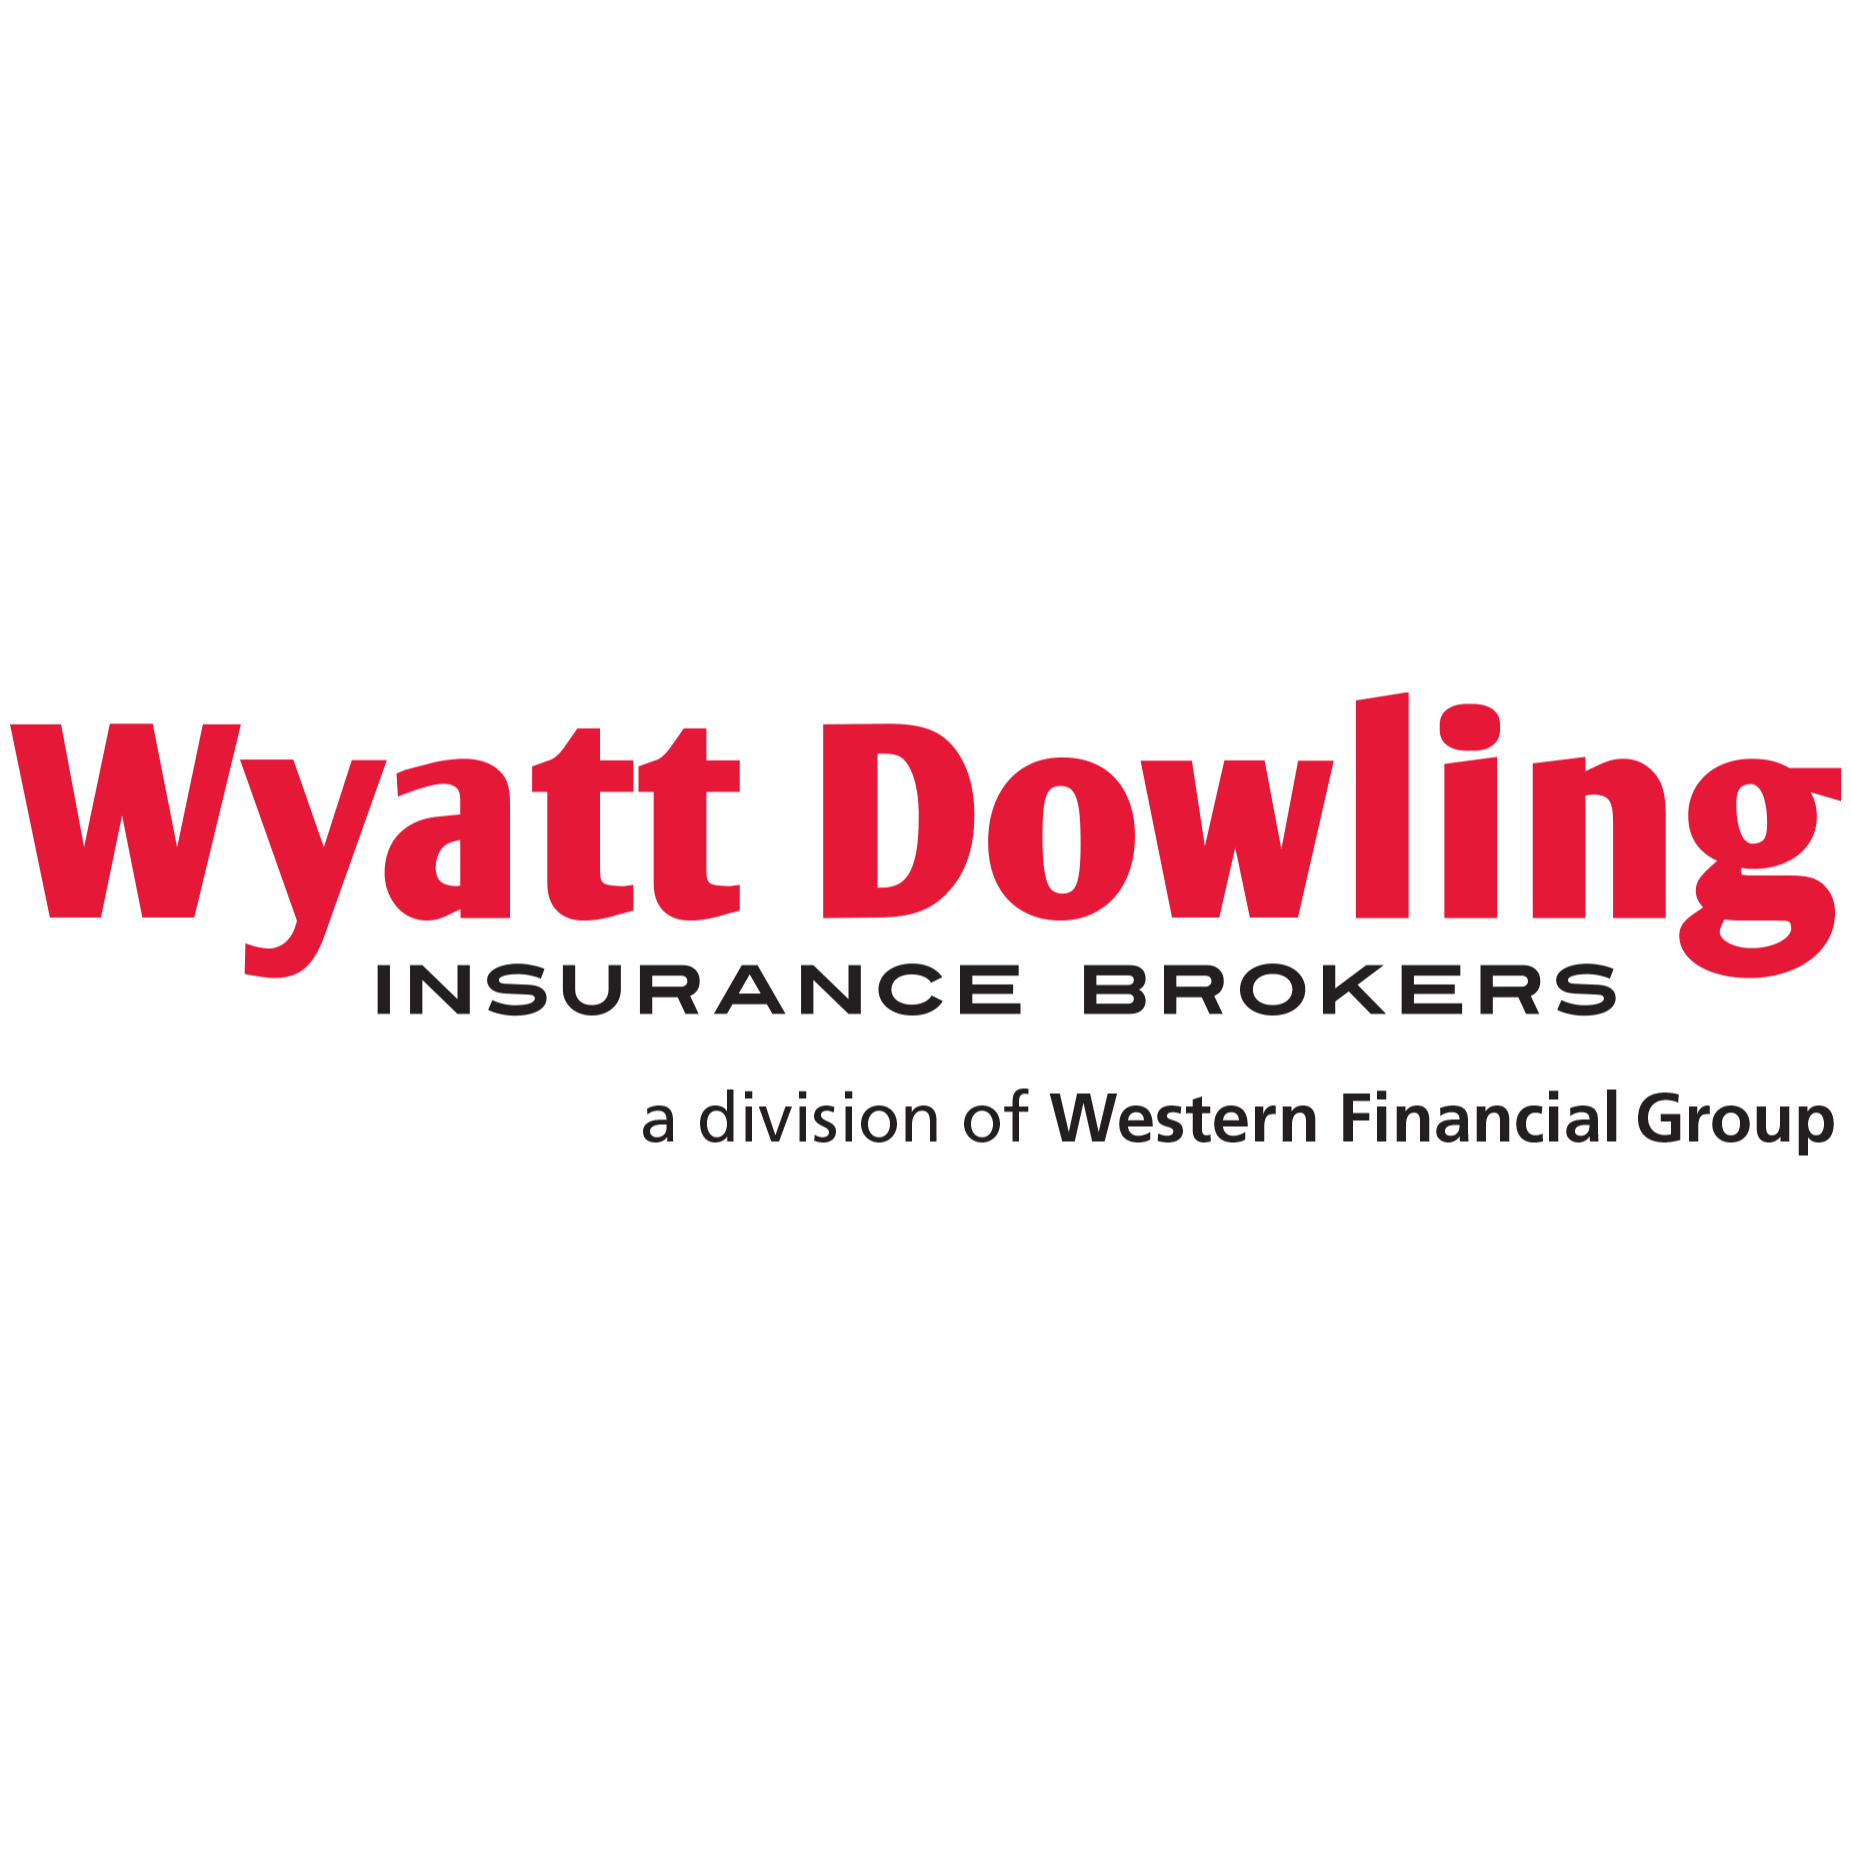 Wyatt Dowling Insurance Brokers Winnipeg (204)222-3221